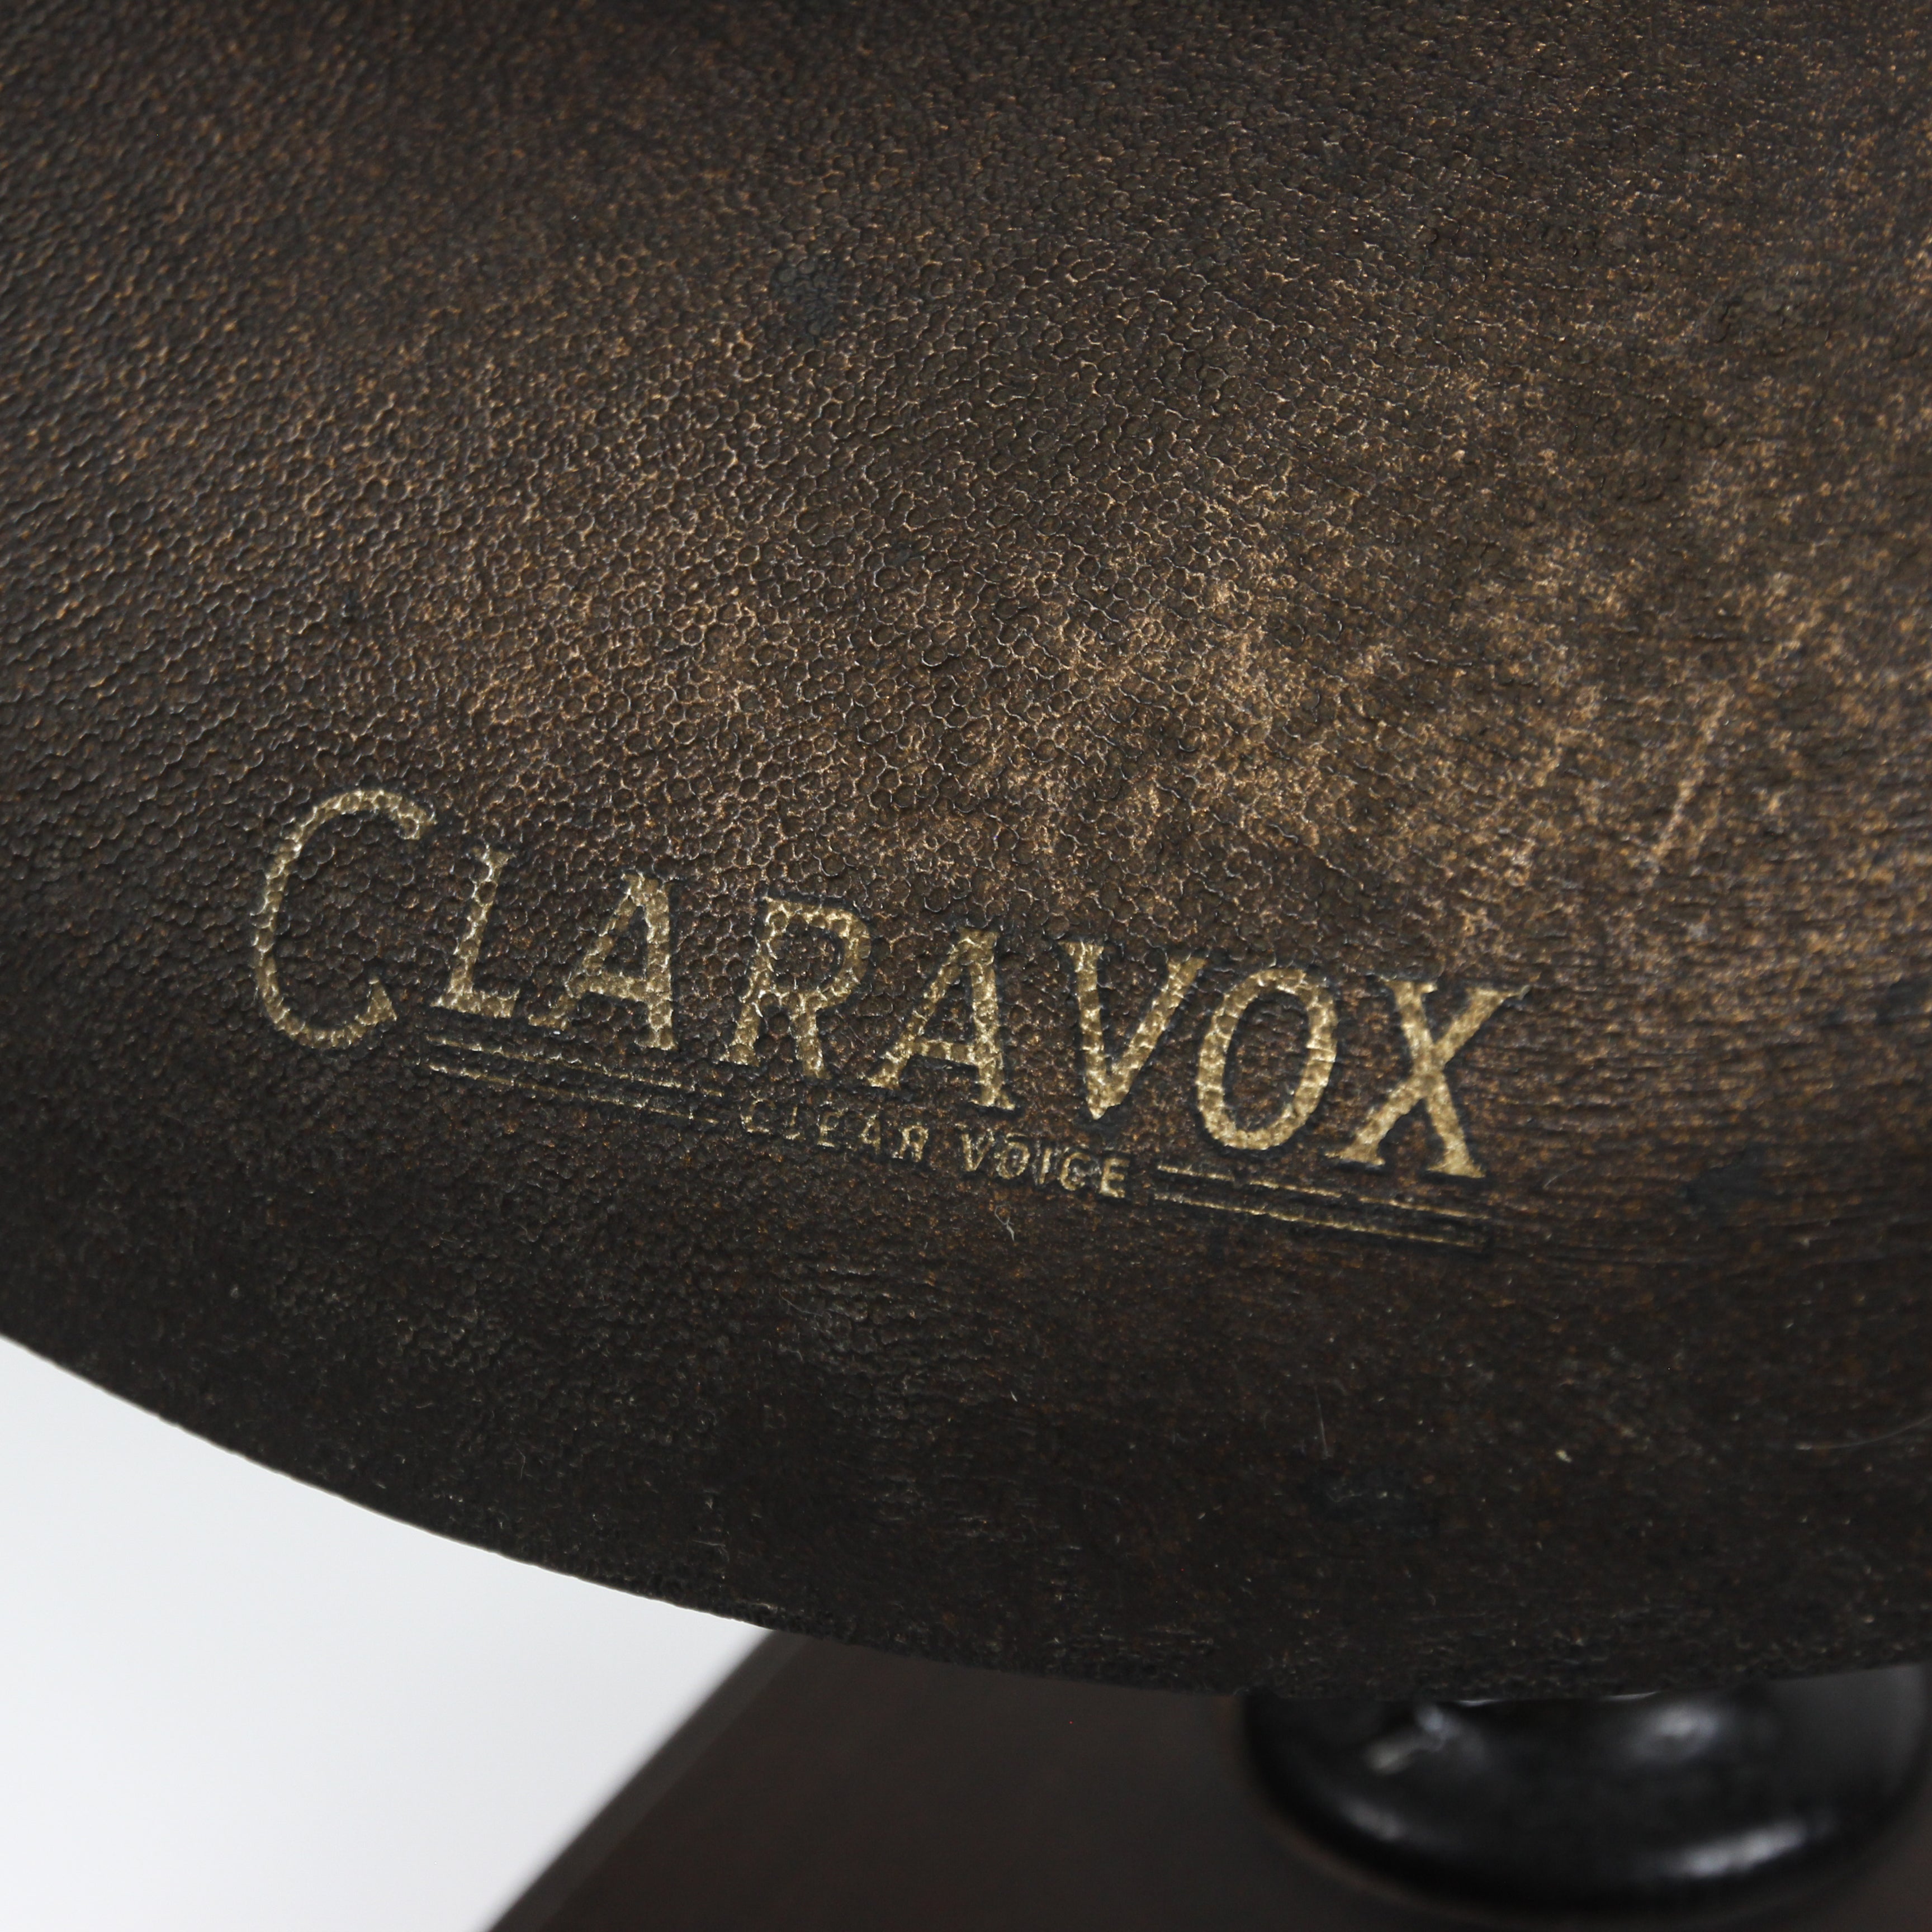 The Claravox